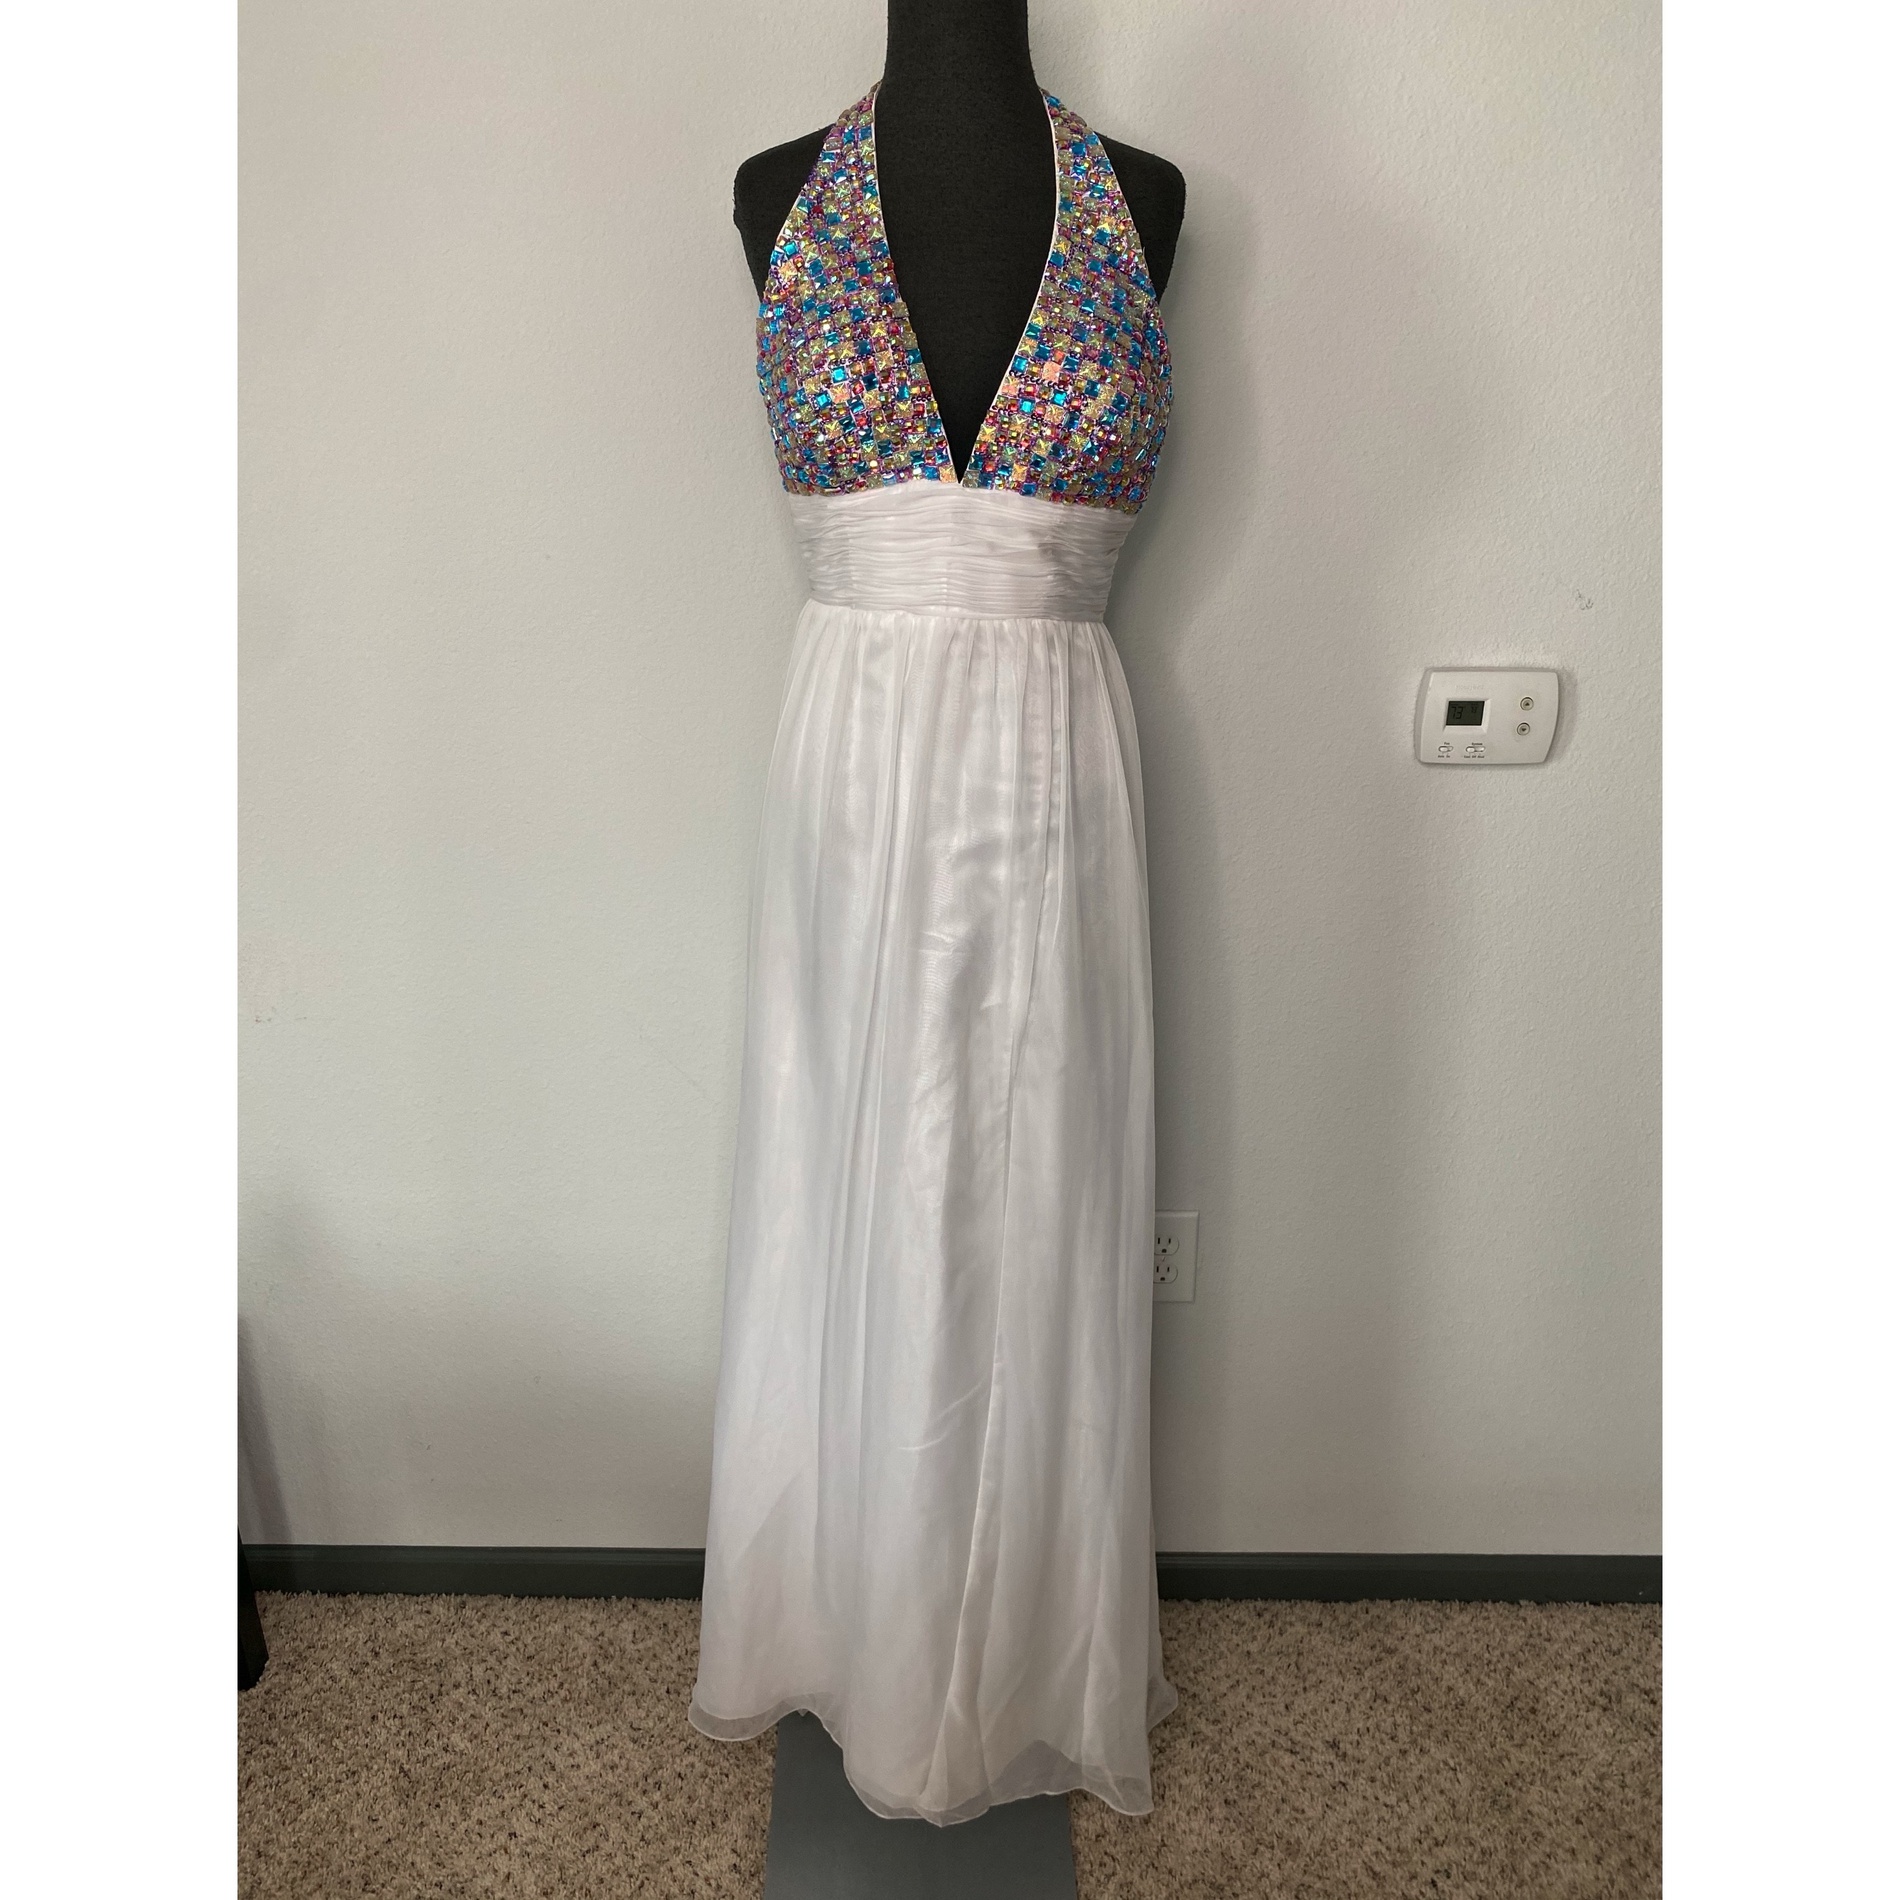 Alyce Paris Size 6 Halter White Side Slit Dress on Queenly